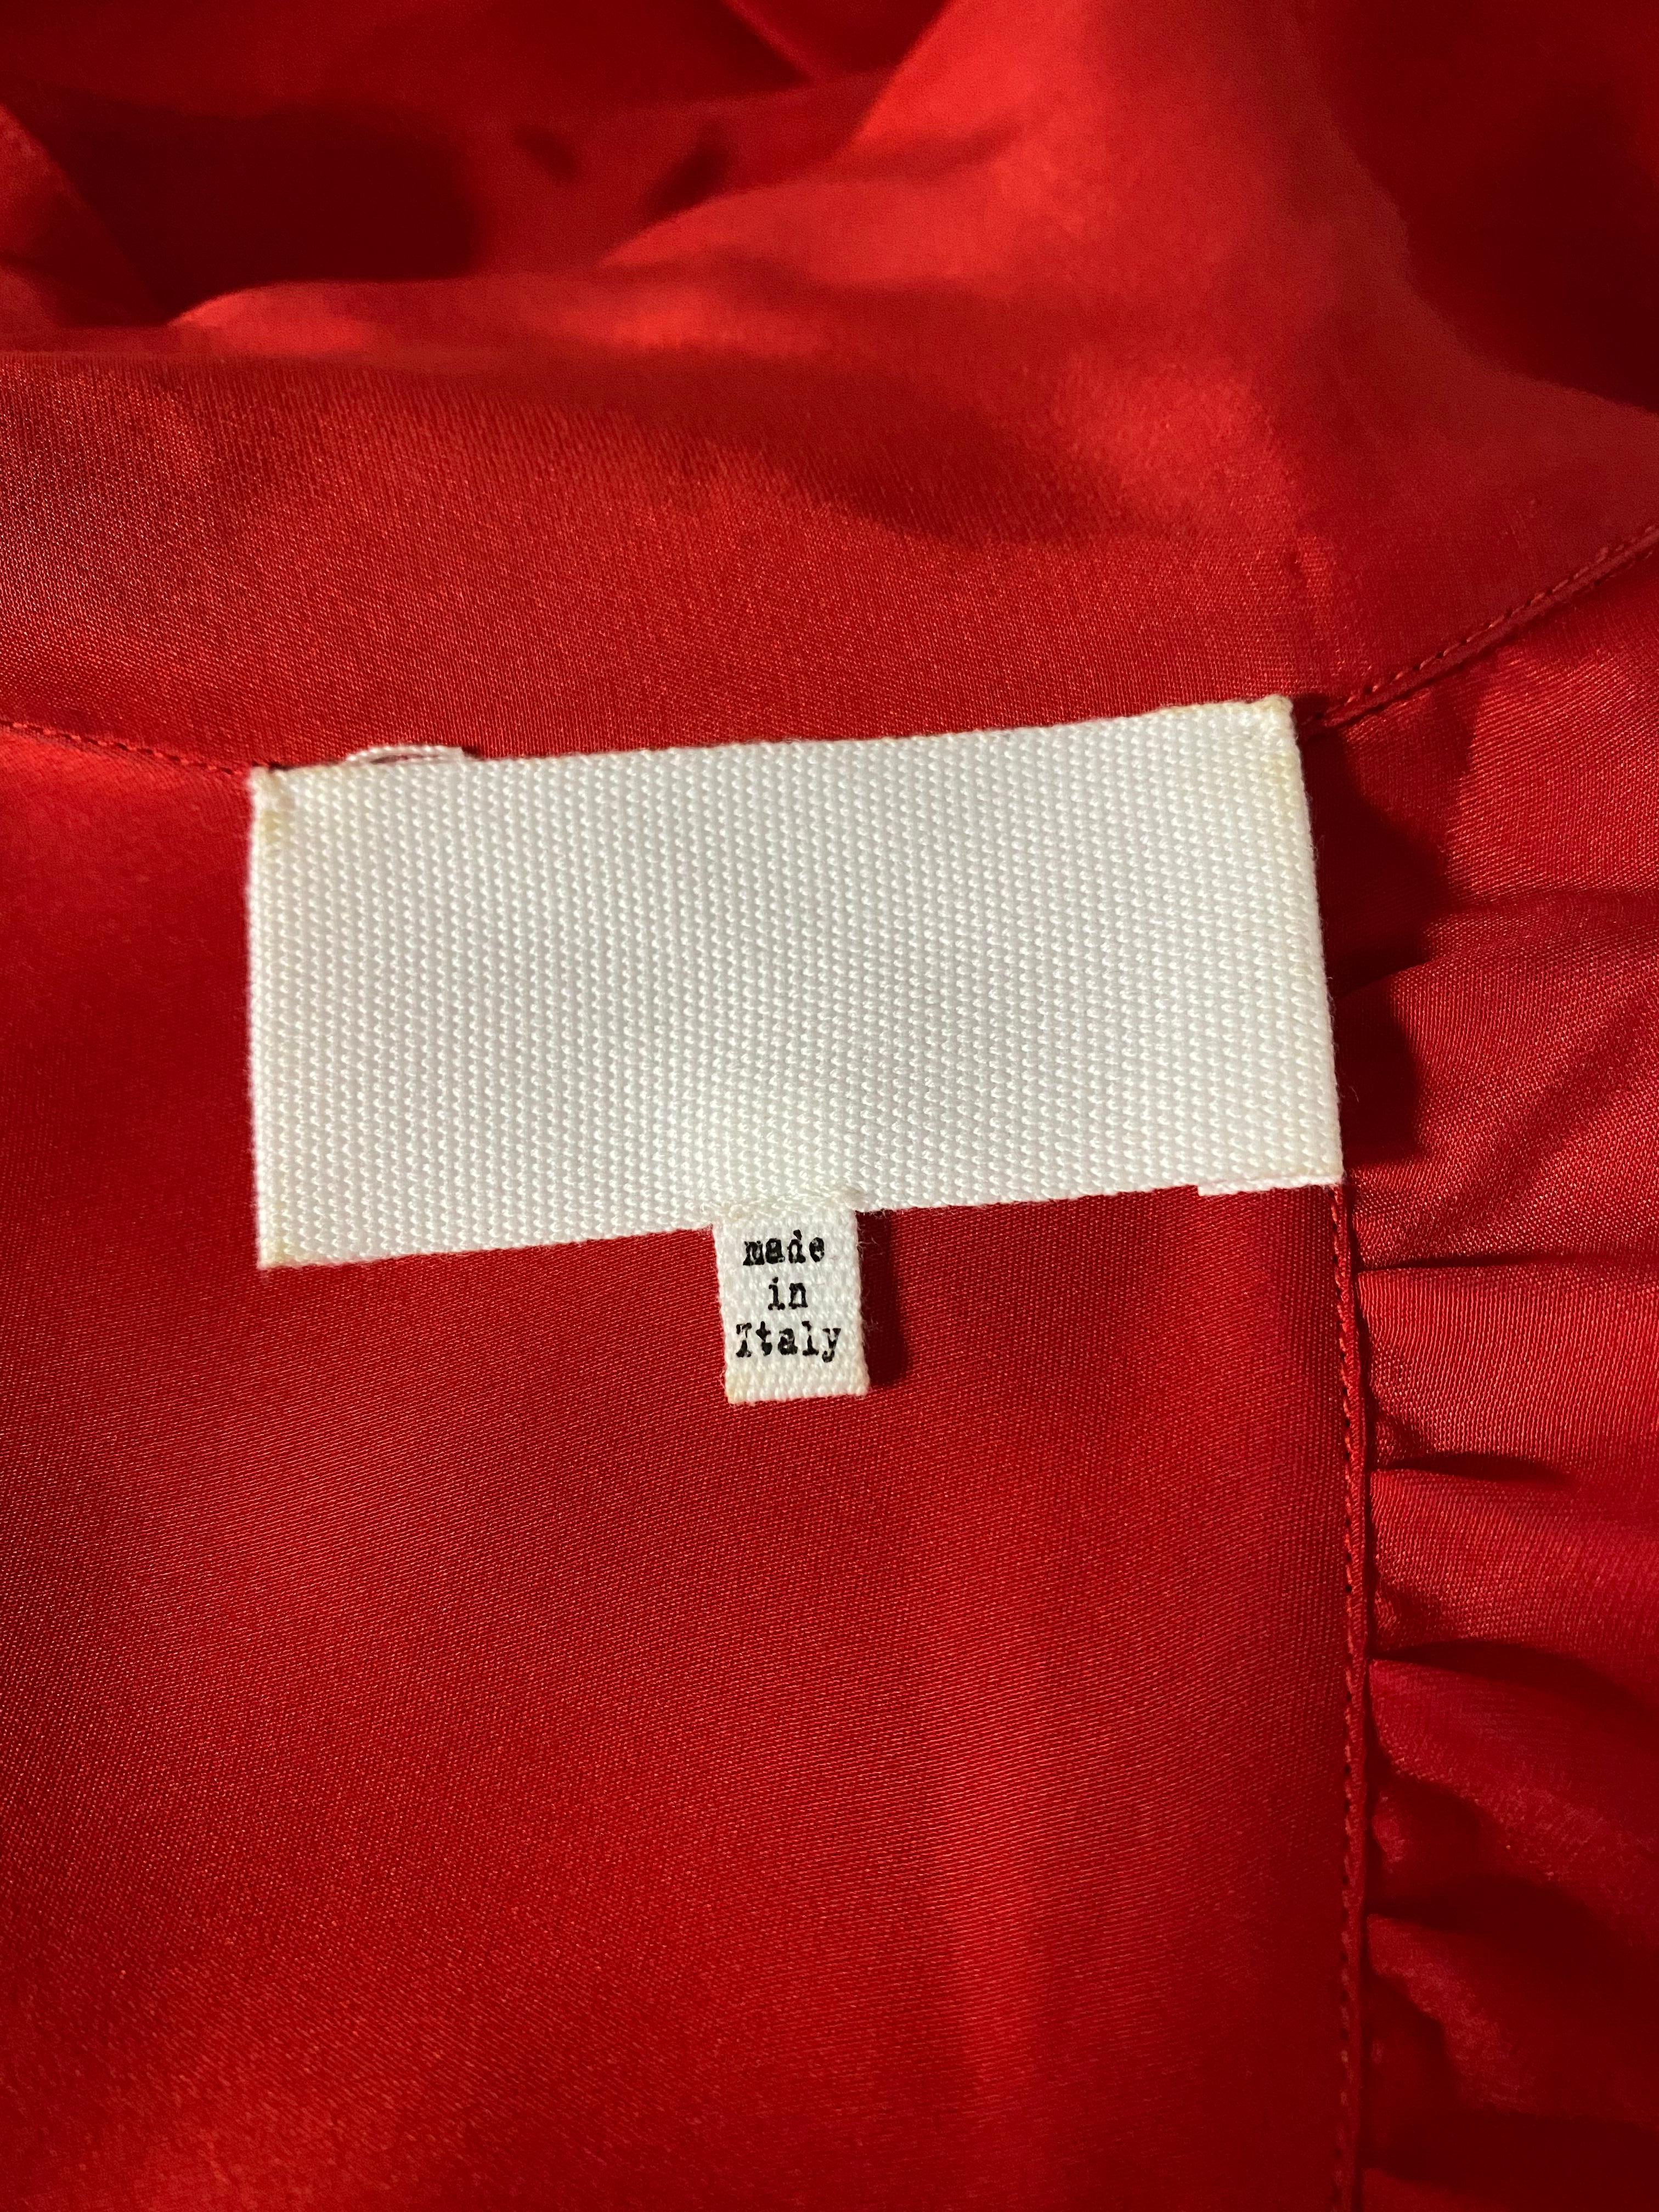 Maison Martin Margiela Paris Red Silk Mini Dress, Size 42 2